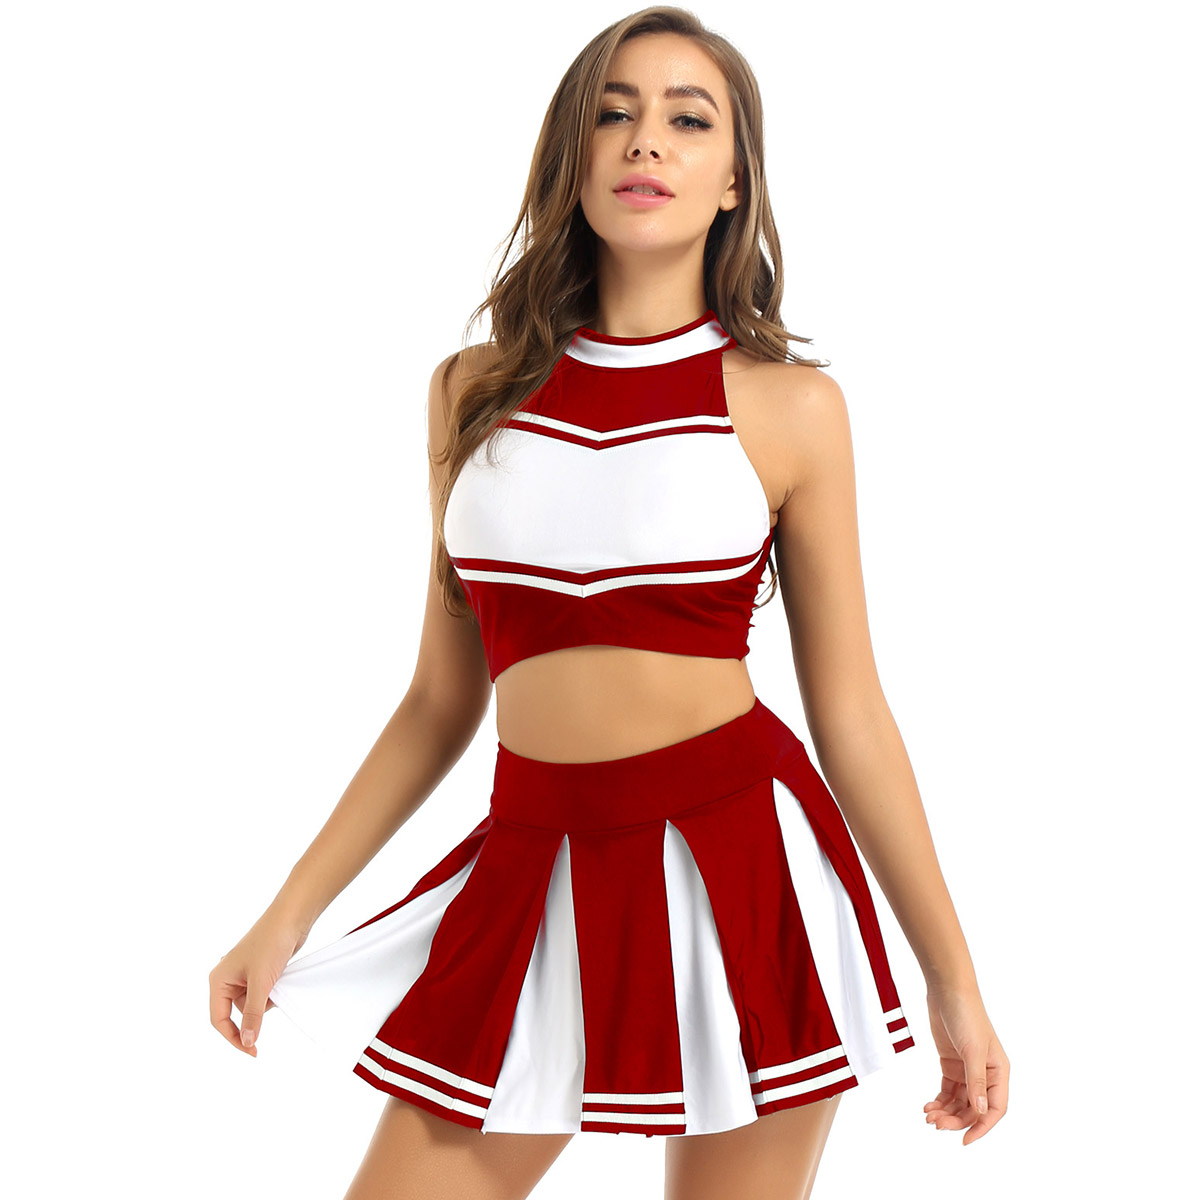 Women Adults Cheerleader Uniform Performance Outfit Japanese Schoolgirl Cosplay Costume Sleeveless Crop Top Mini Pleated Skirt